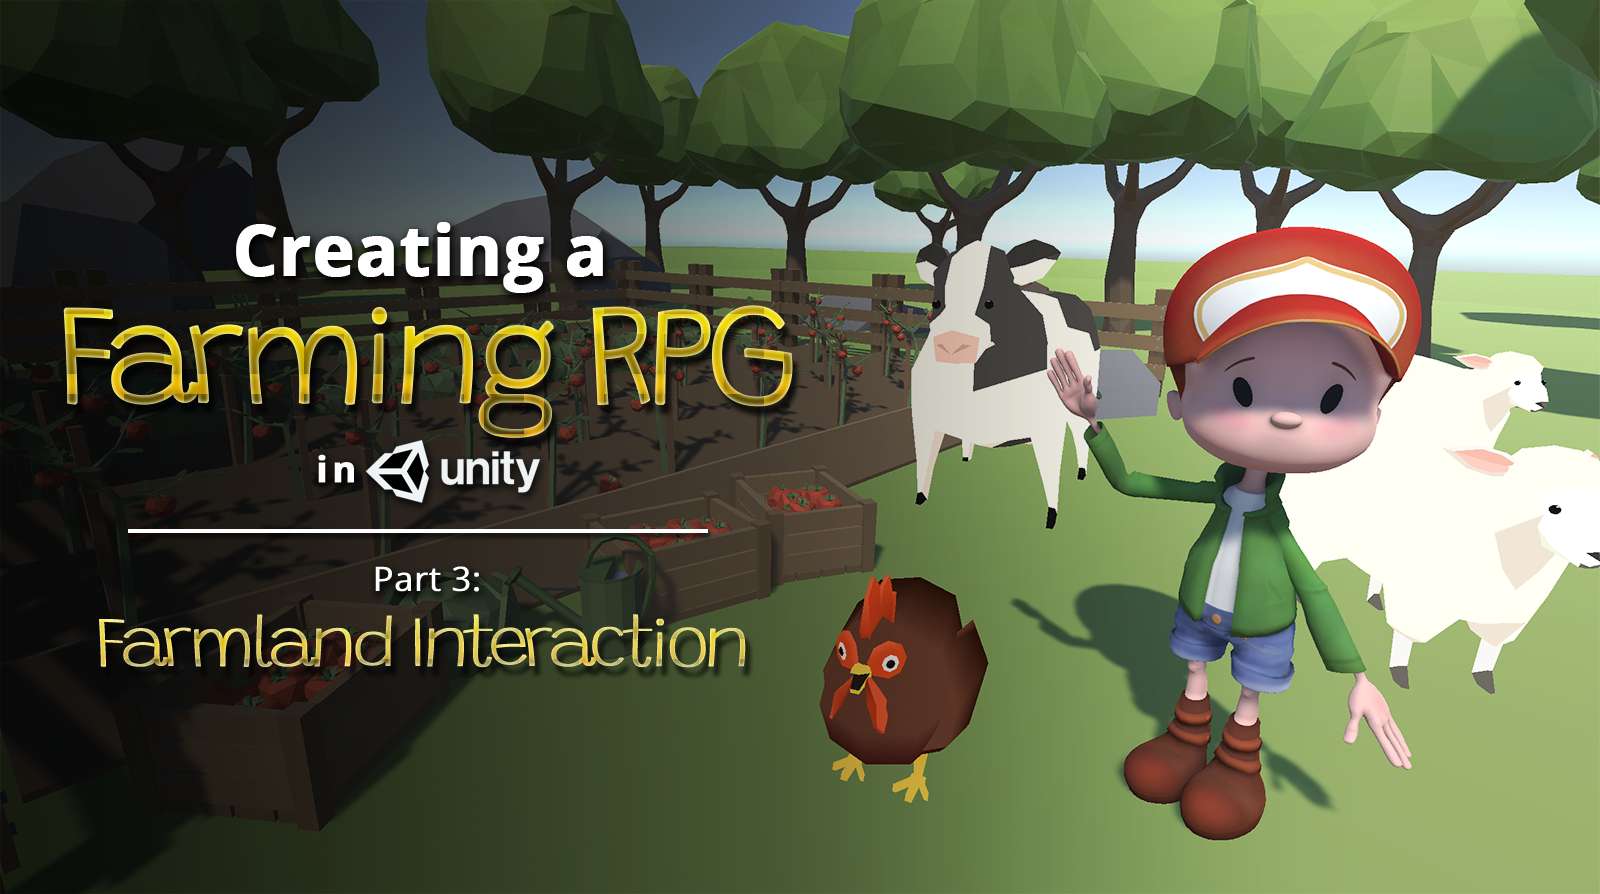 Creating a farming RPG in Unity - Part 3: Farmland Interaction